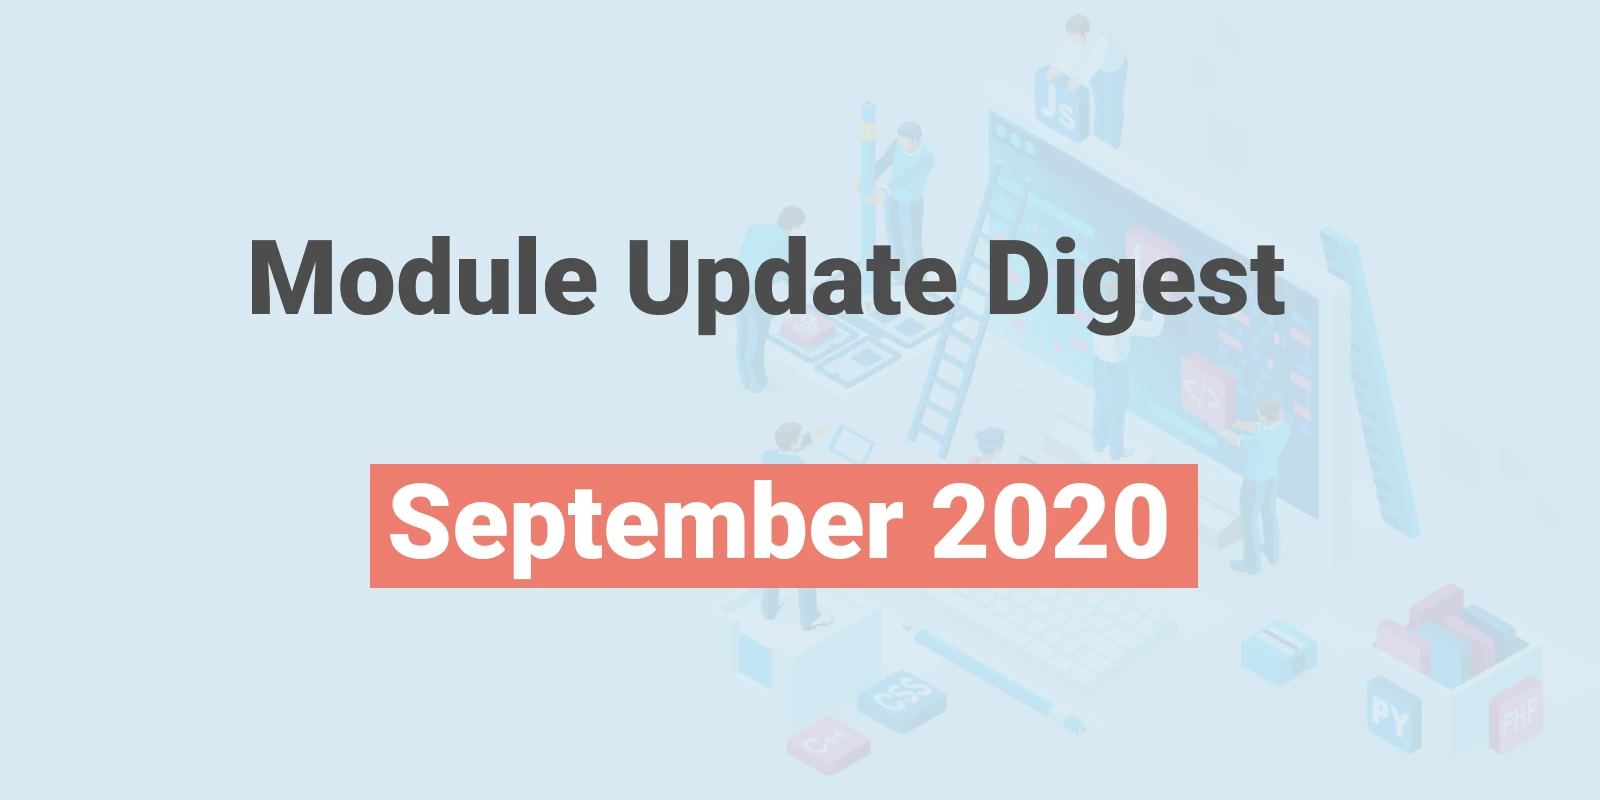 Module Update Digest: September 2020